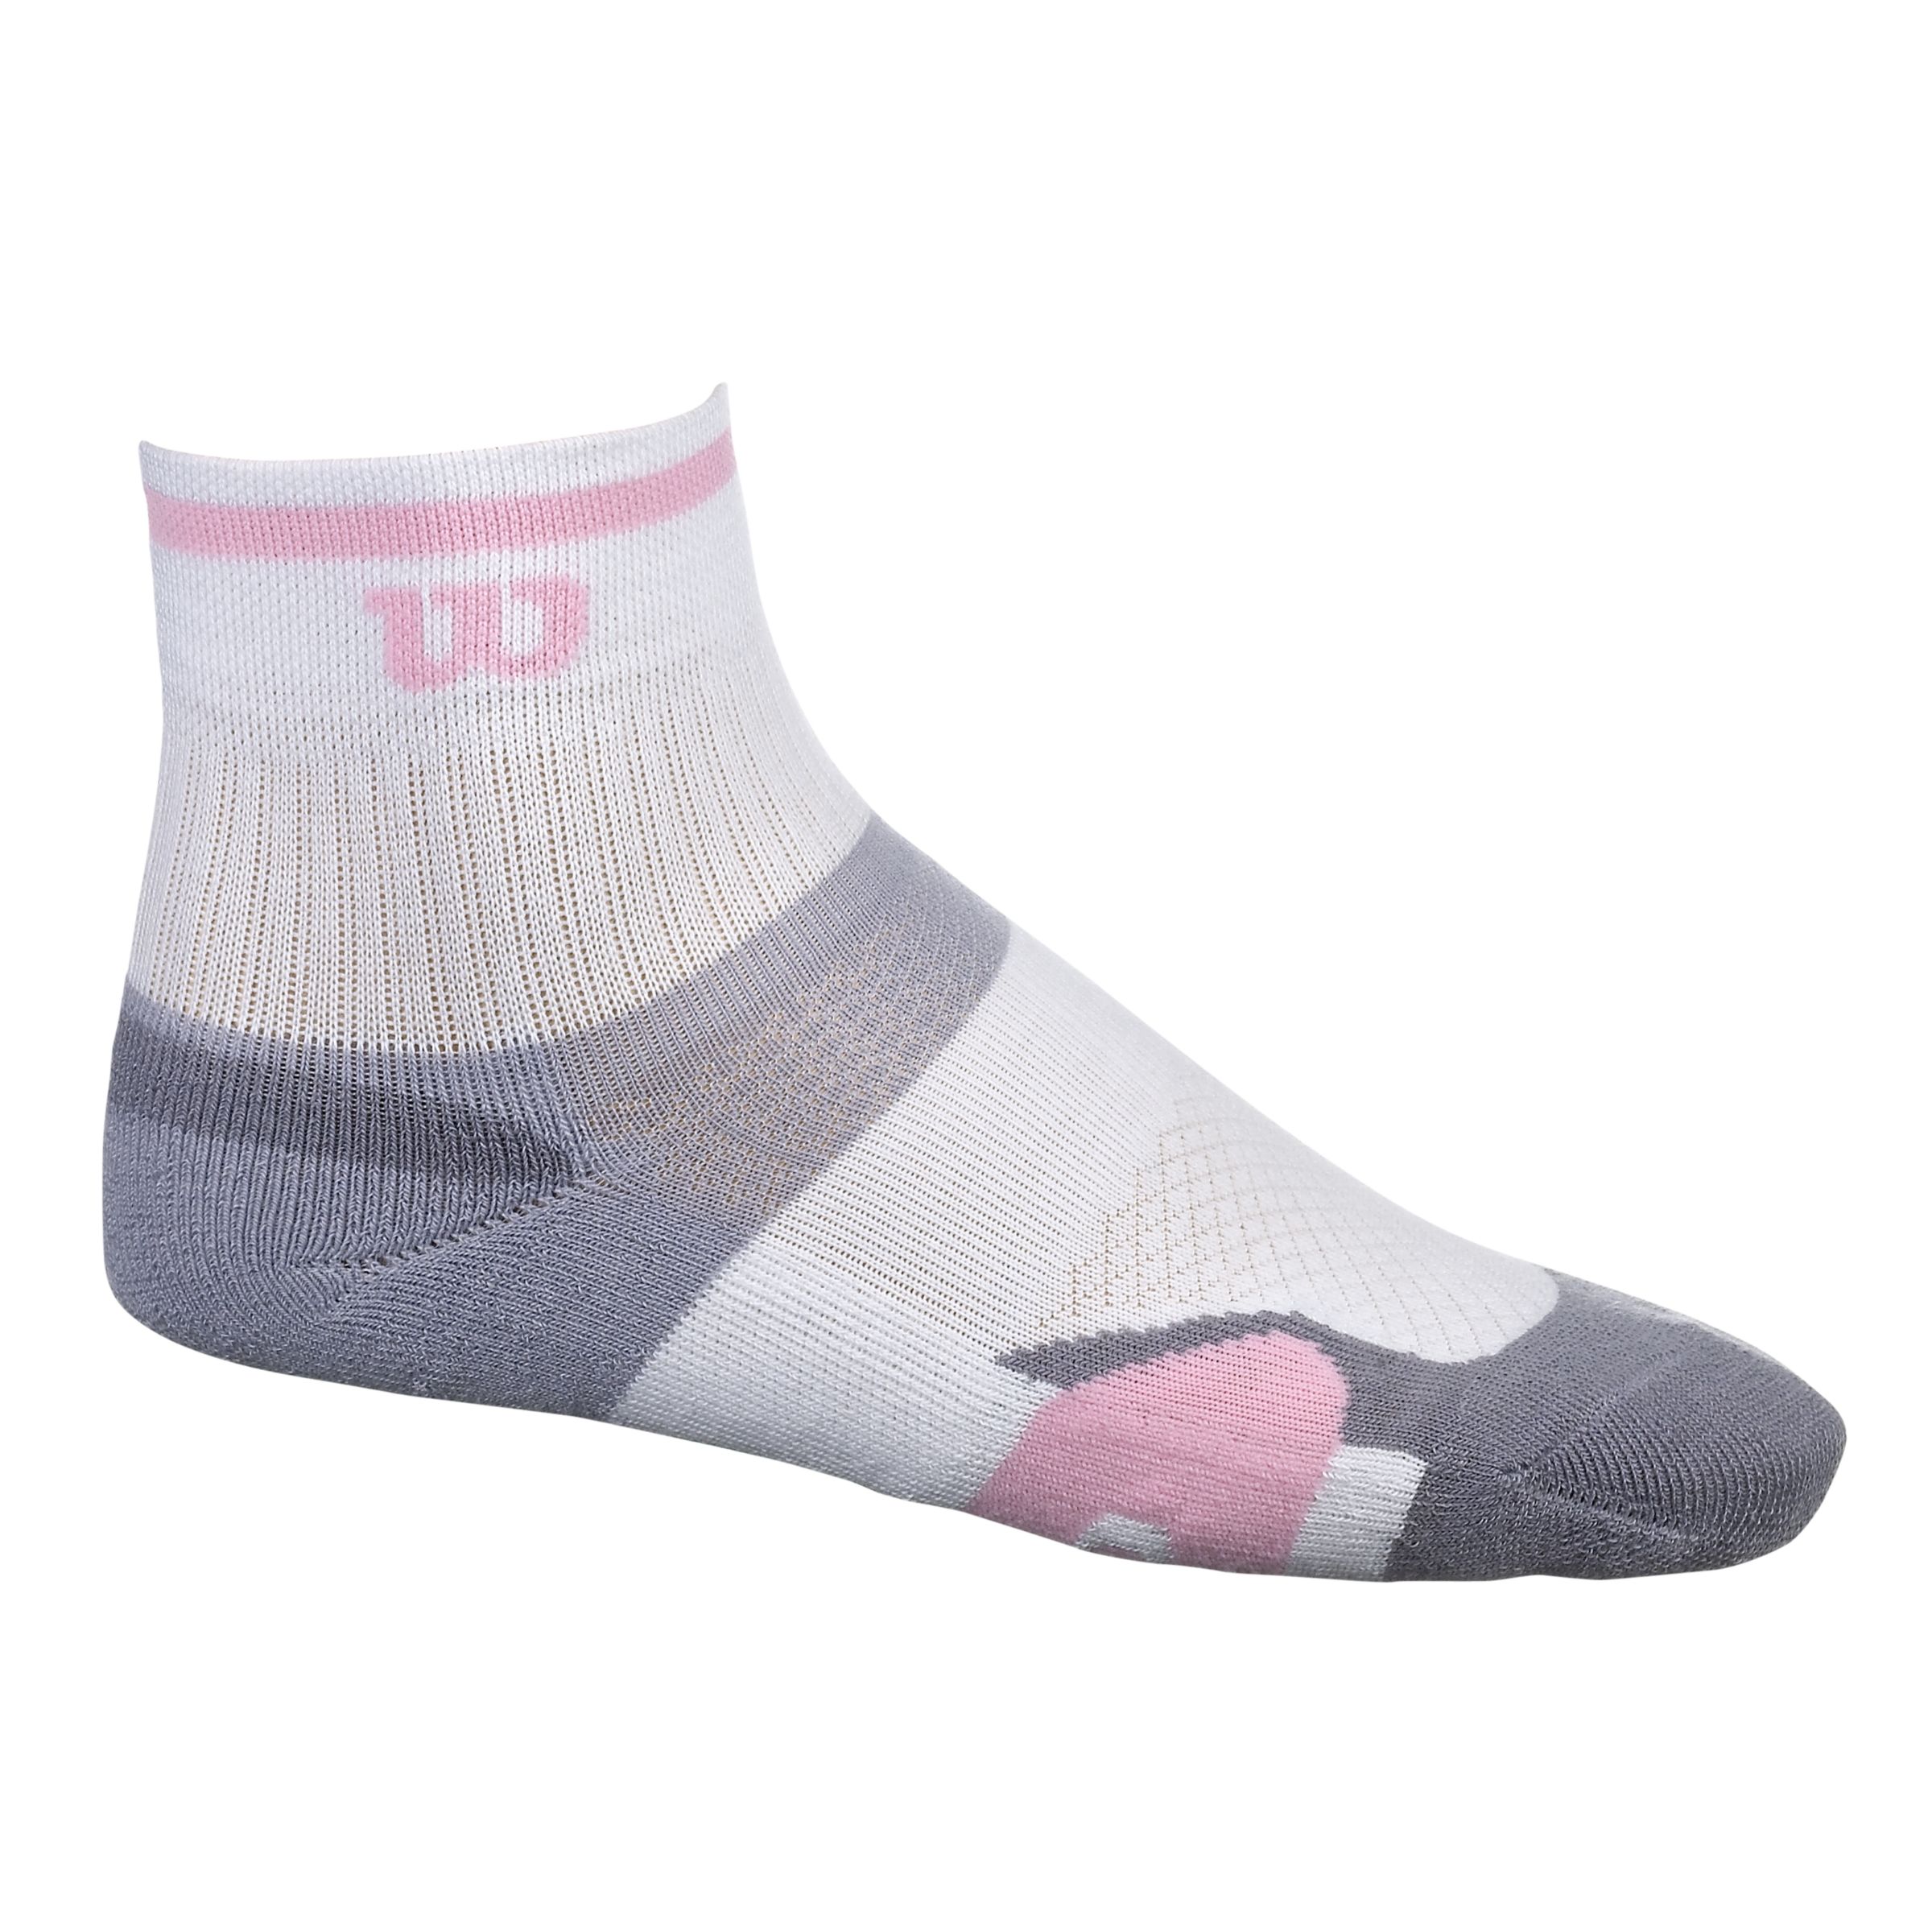 Wilson ErgoStep Women's Tennis Socks, White/Grey/Pink, 4-8